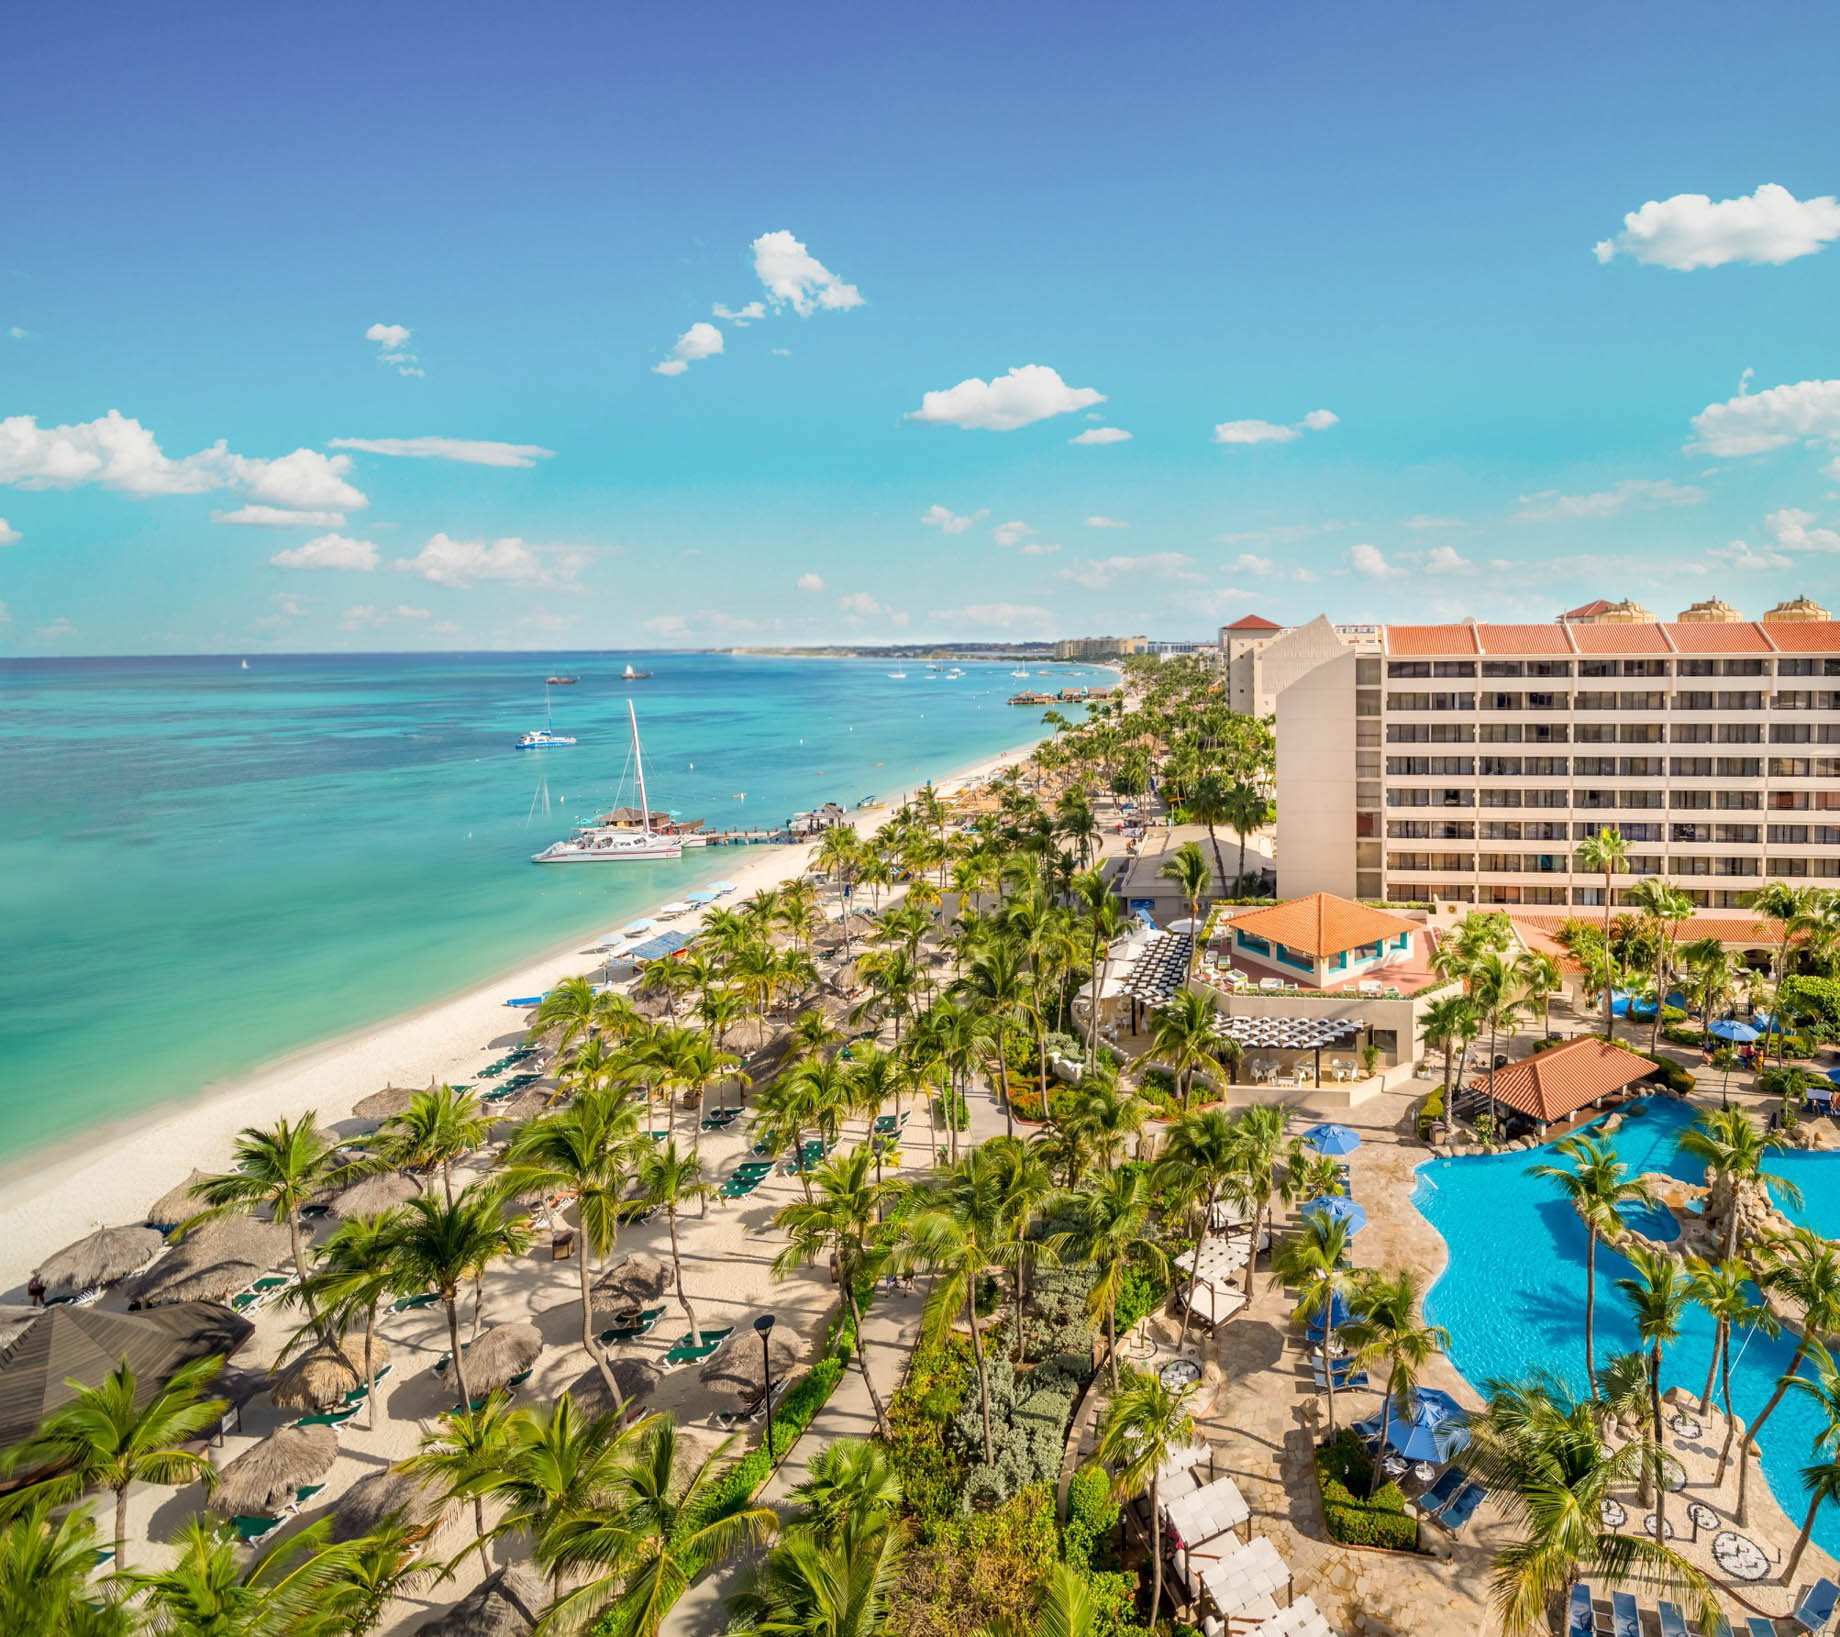 Barceló Aruba Palm Beach Resort – Noord, Aruba – Aerial View